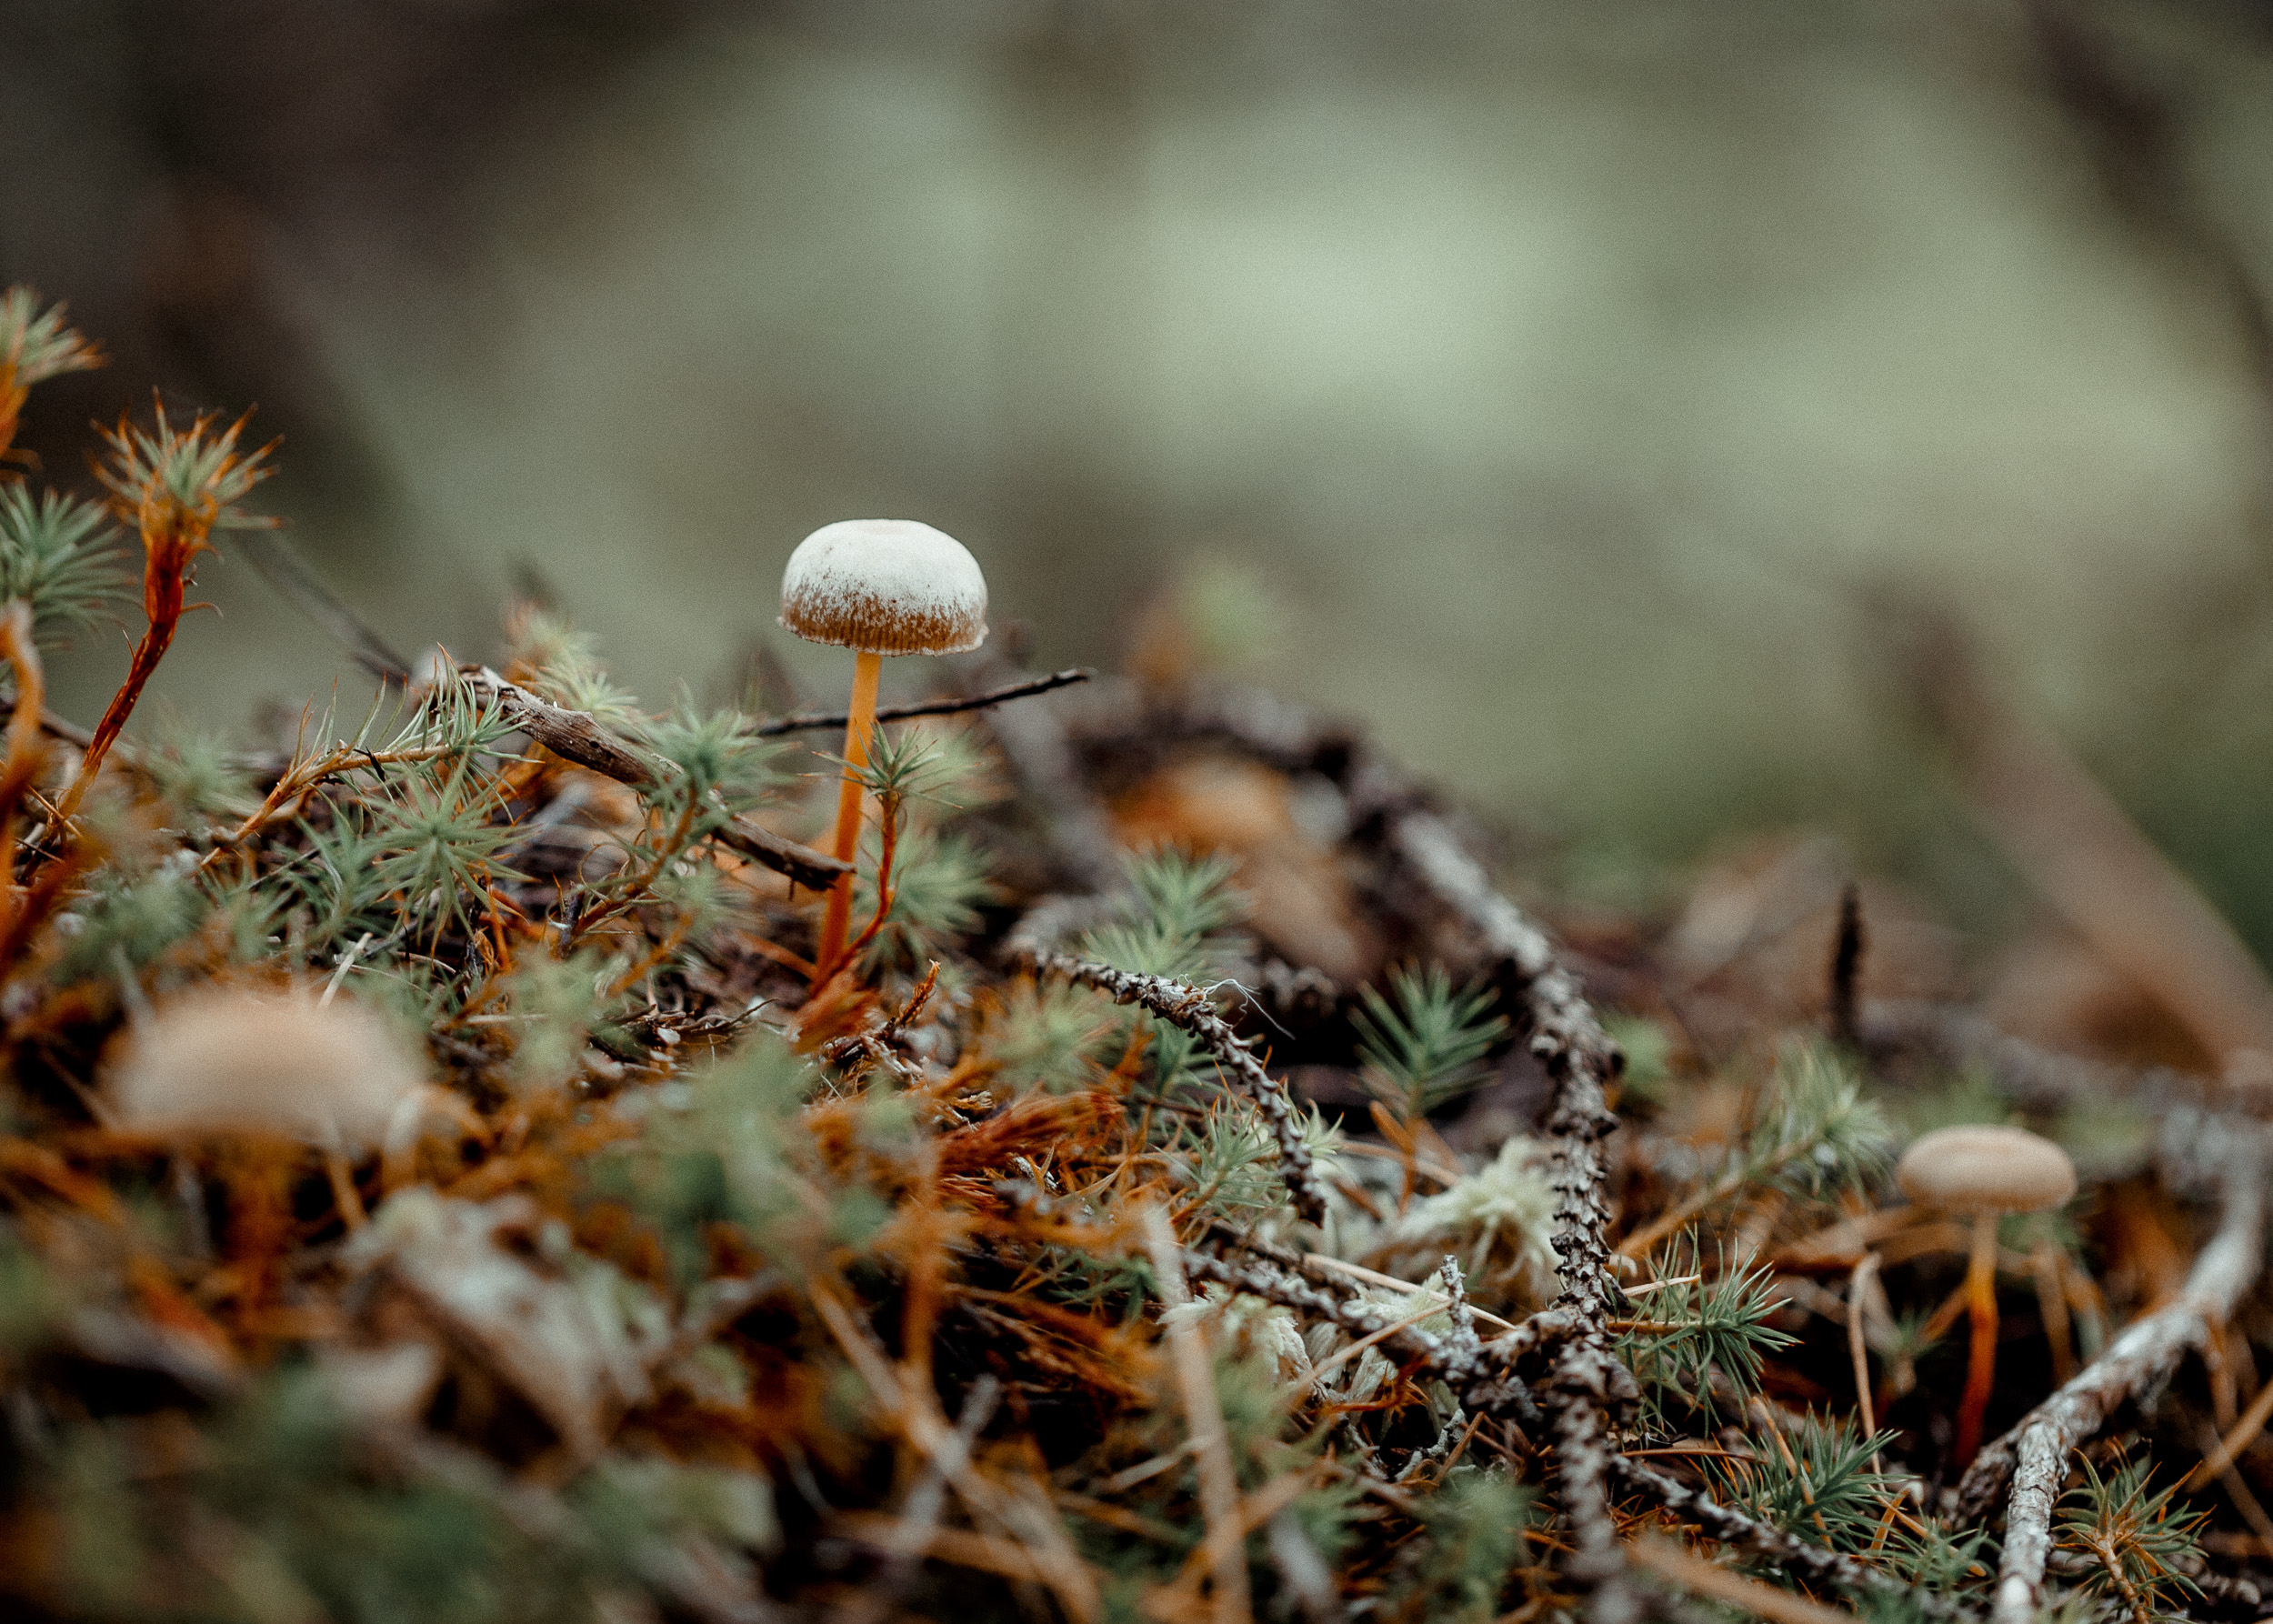 09-fungi-fungus-macro-forest-mushroom-anna-elina-lahti-photographer.jpg